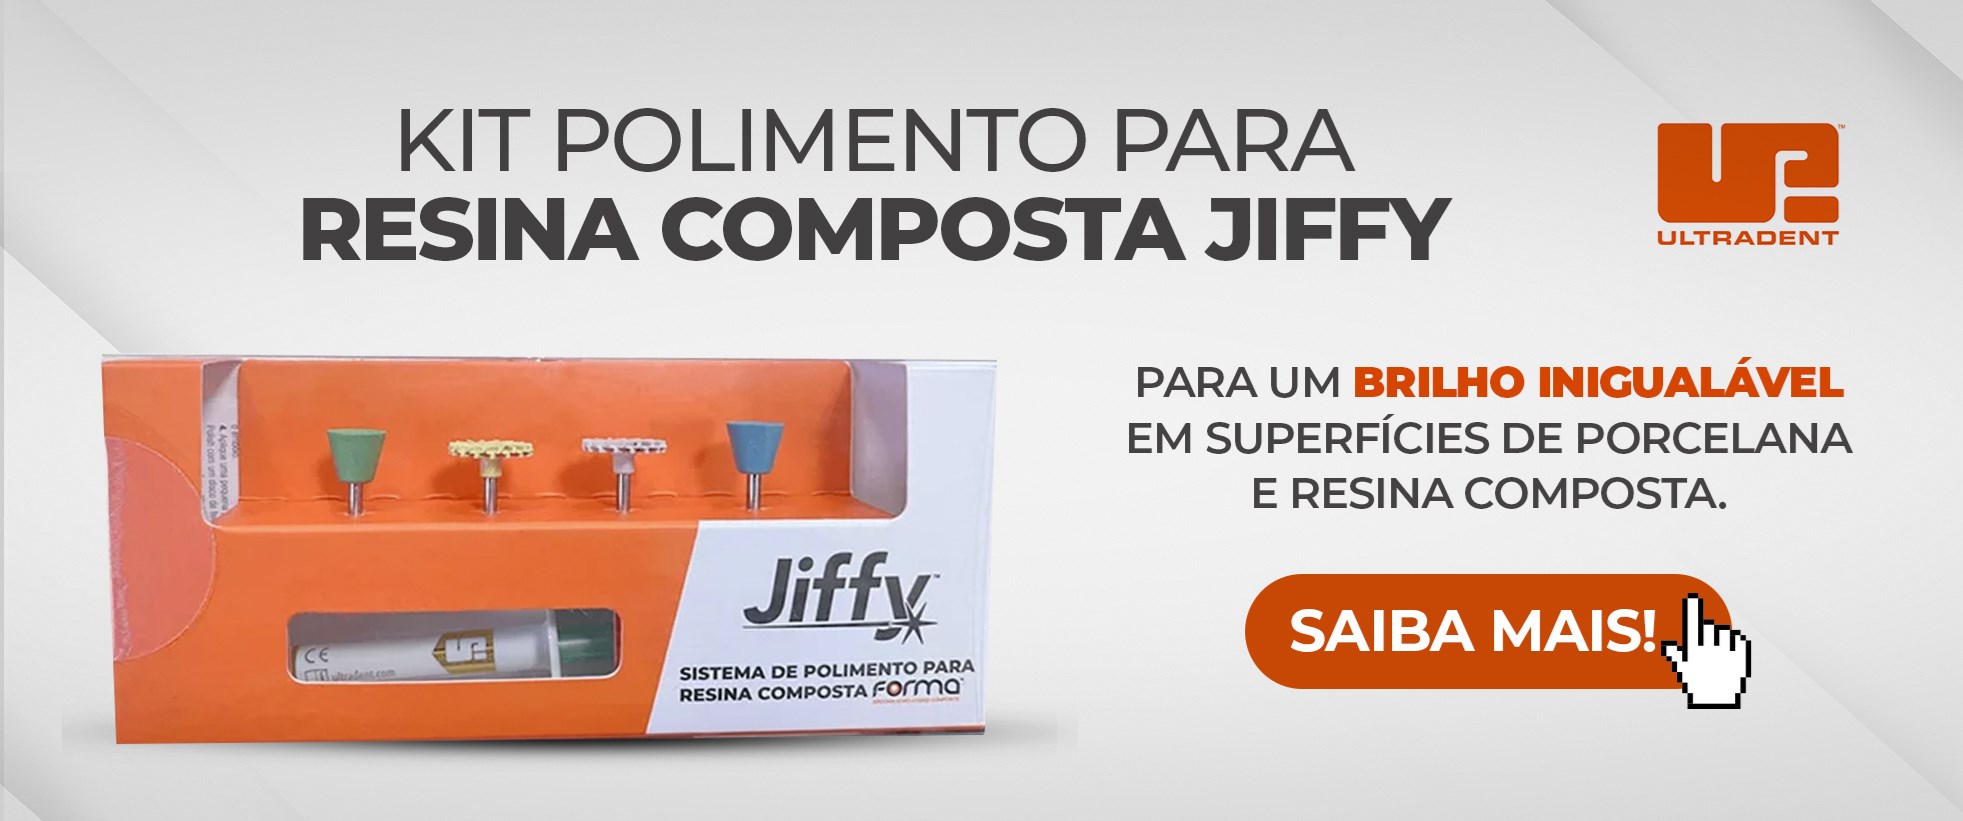 Kit Polimento para Resina Composta Jiffy - Ultradent